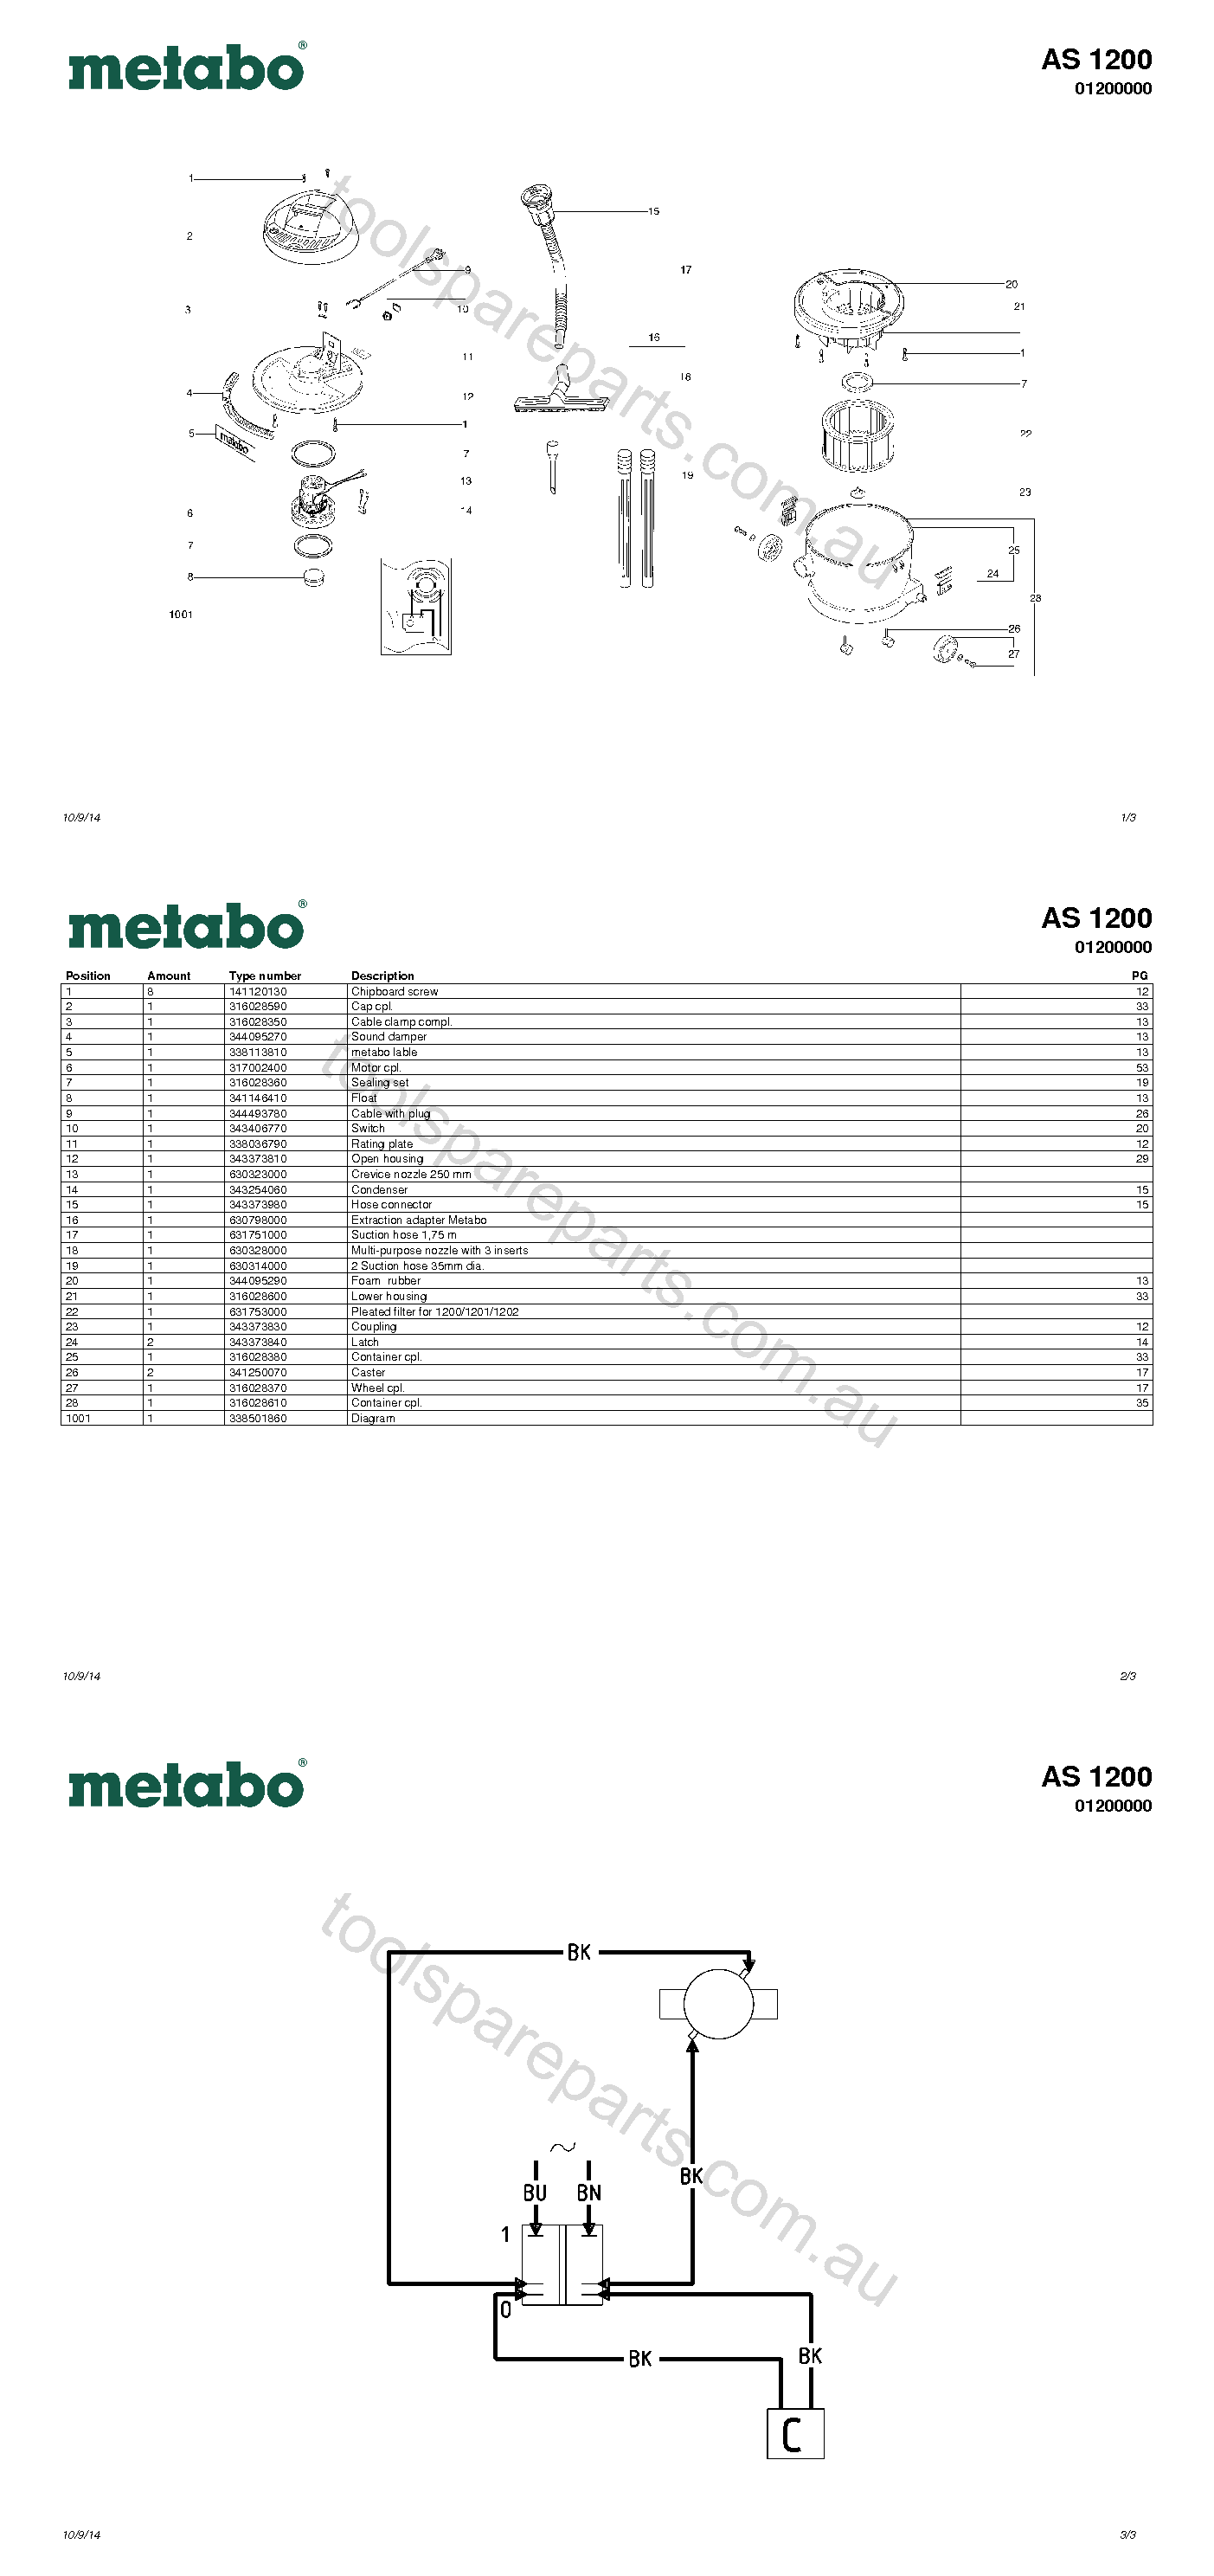 Metabo AS 1200 01200000  Diagram 1